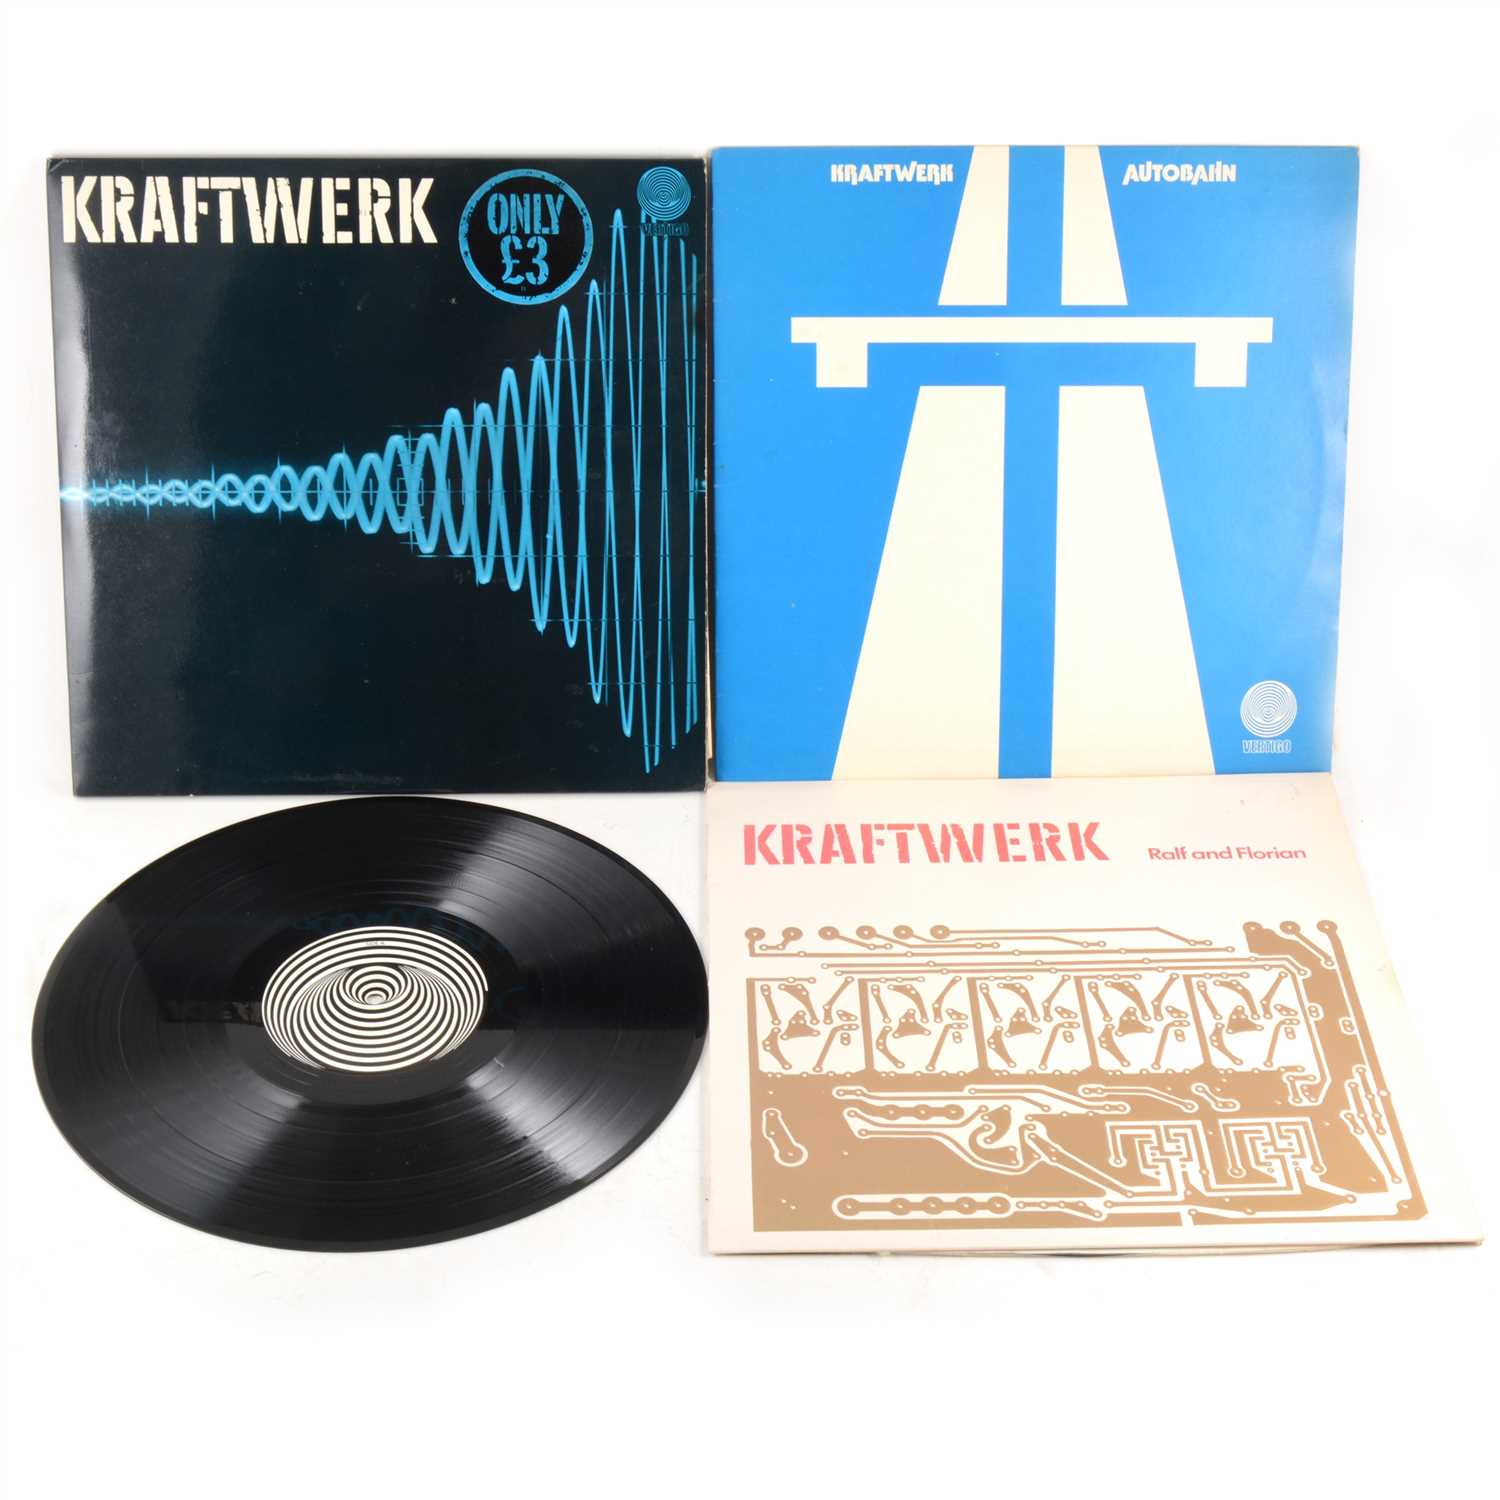 Lot 669 - Kraftwerk; three vinyl record LP albums, Autobahn, Ralf and Florian.